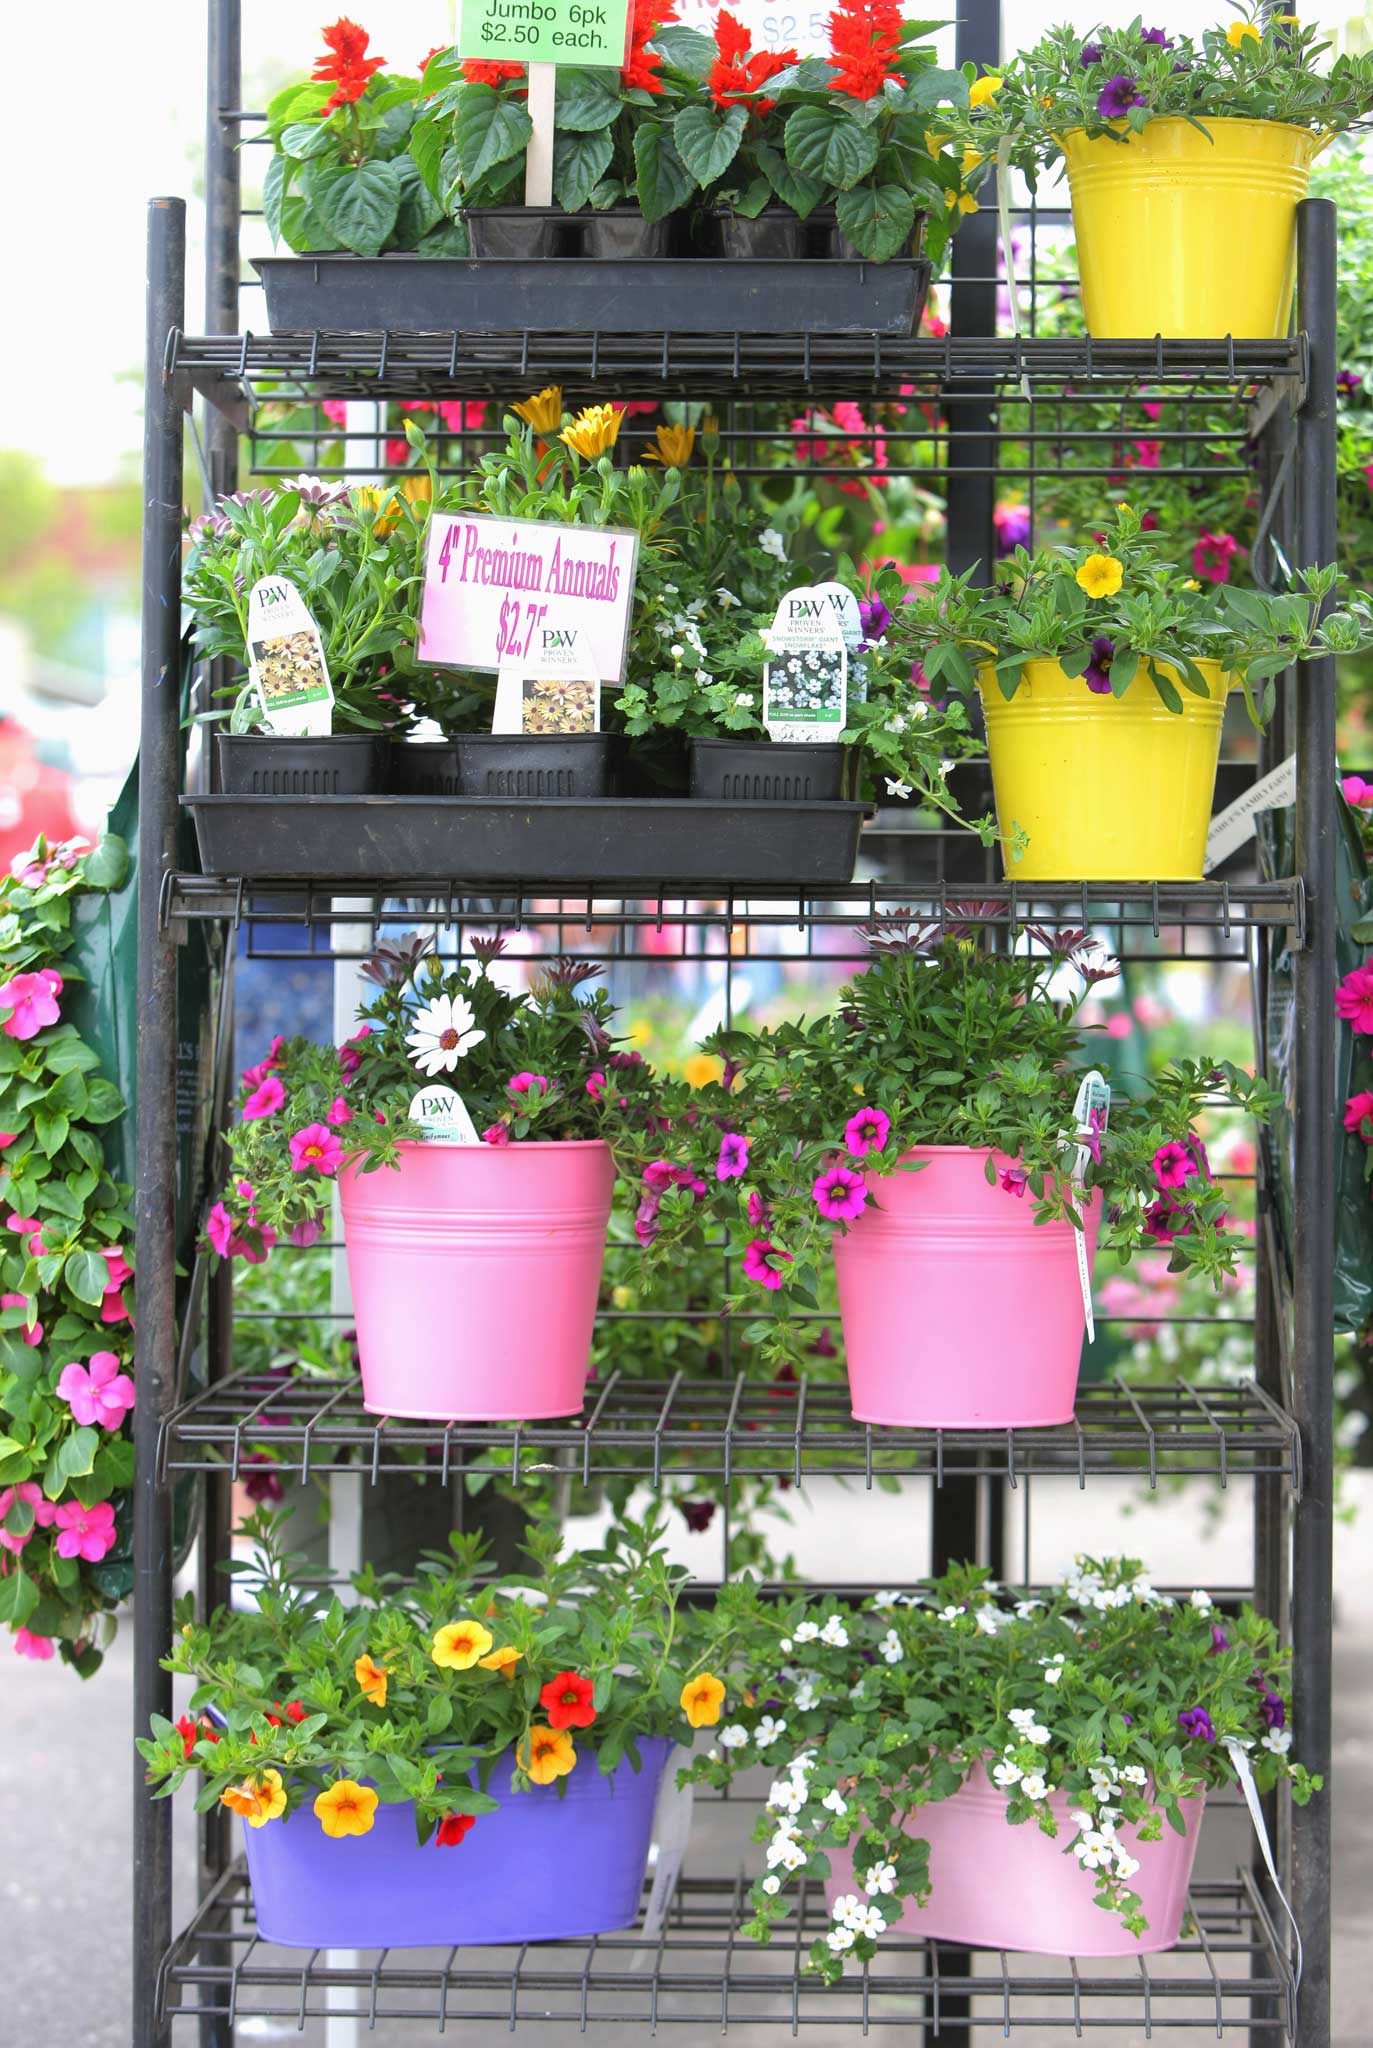 Pots of money: garden-centre goodies to tempt you towards your next impulse purchase